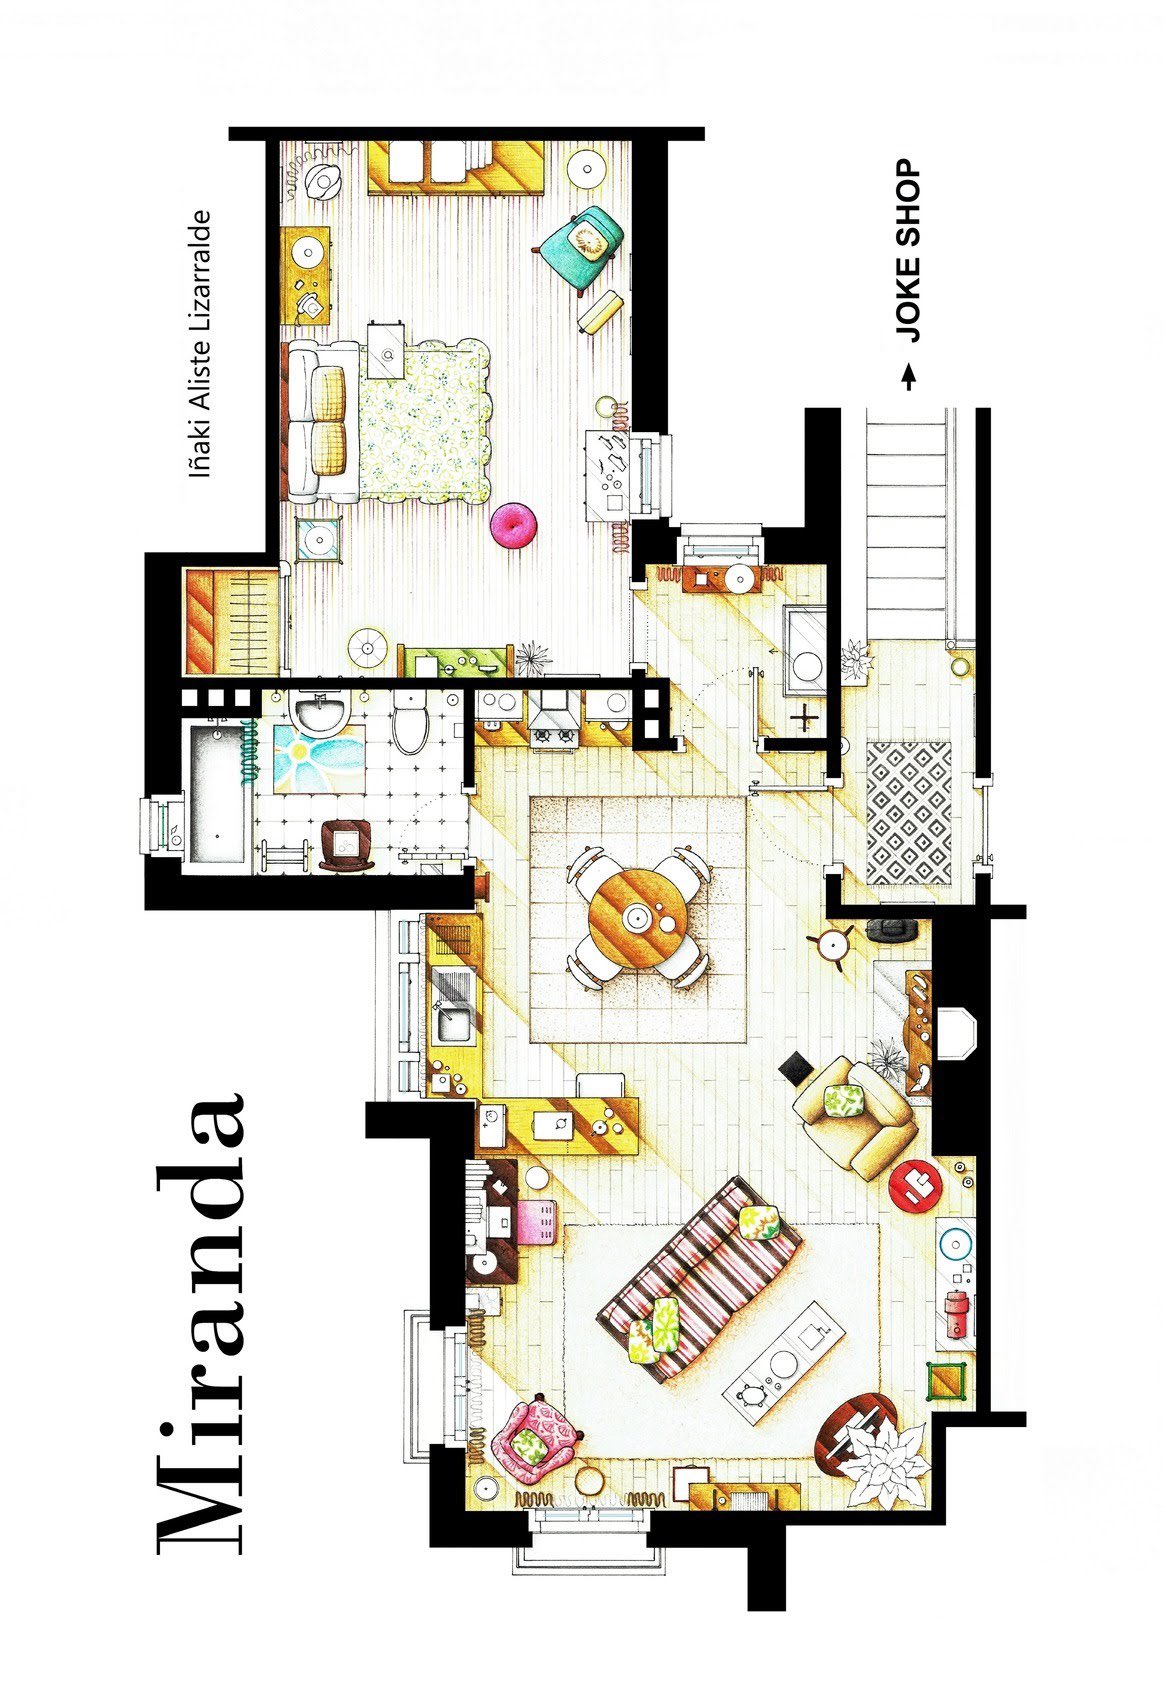 olivia pope apartment layout